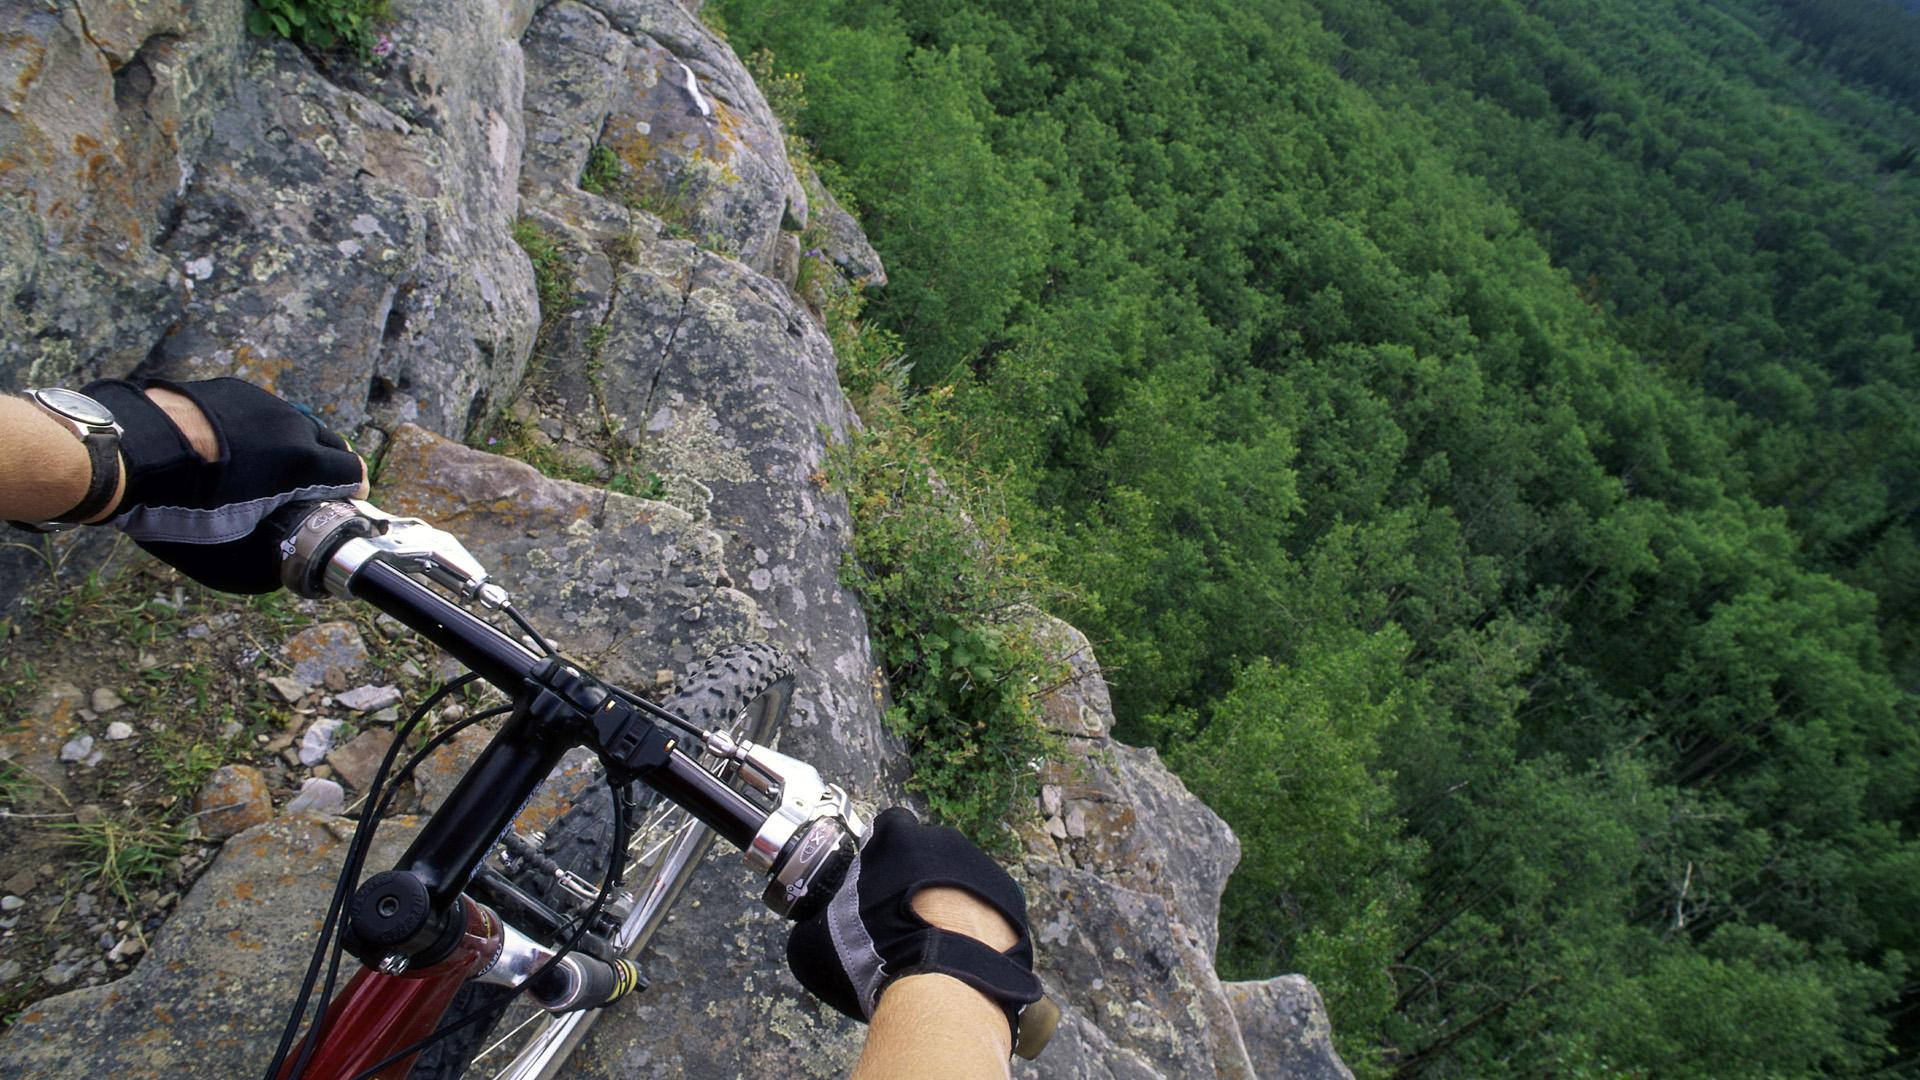 Bike Ride On Steep Cliff Wallpaper